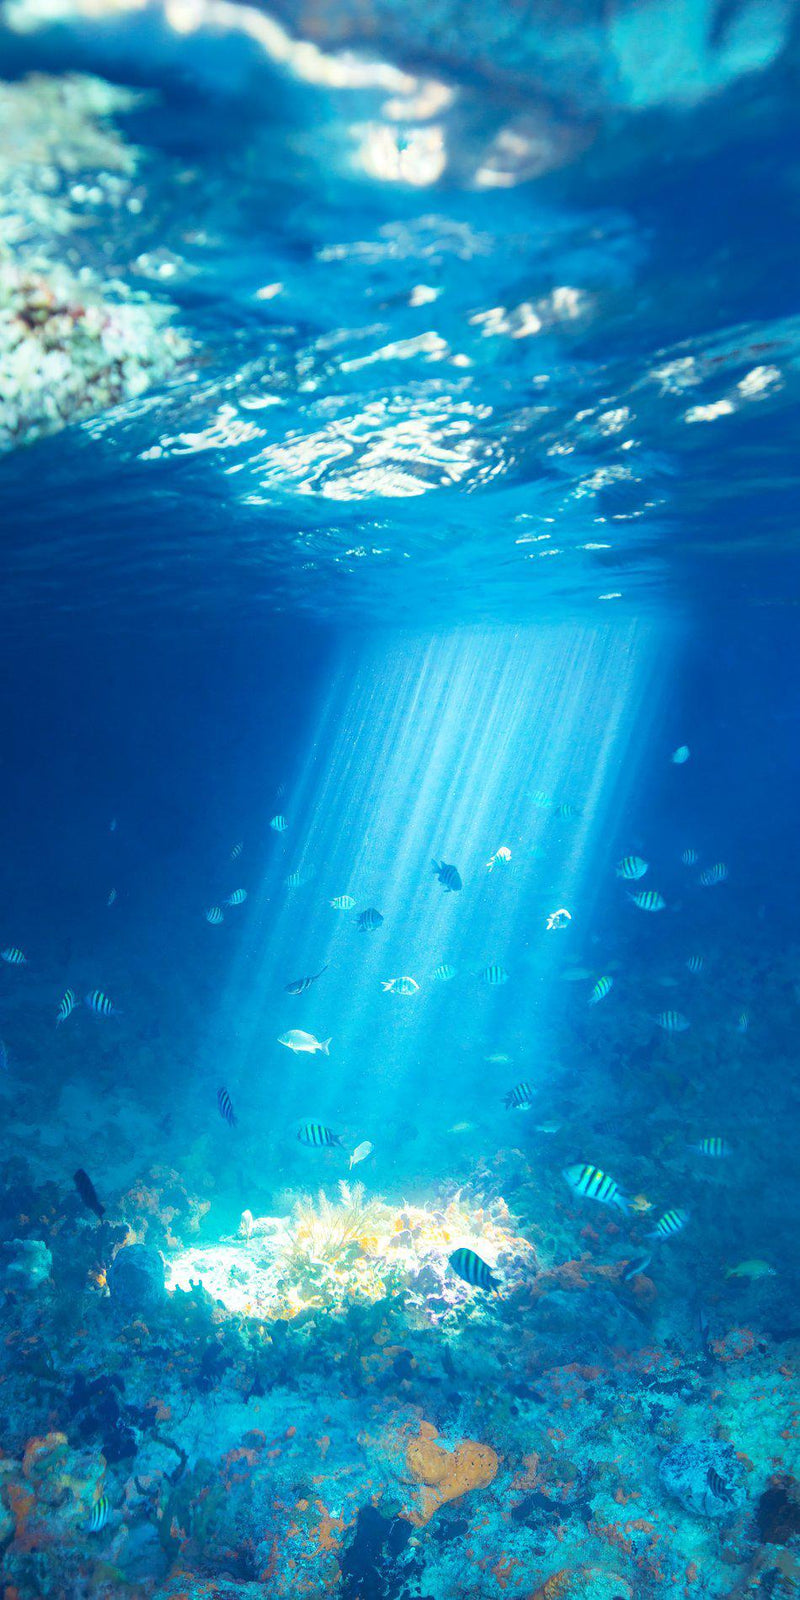 A shaft of light illuminates a coral reef in Exuma, Bahamas. By Lijah Hanley.